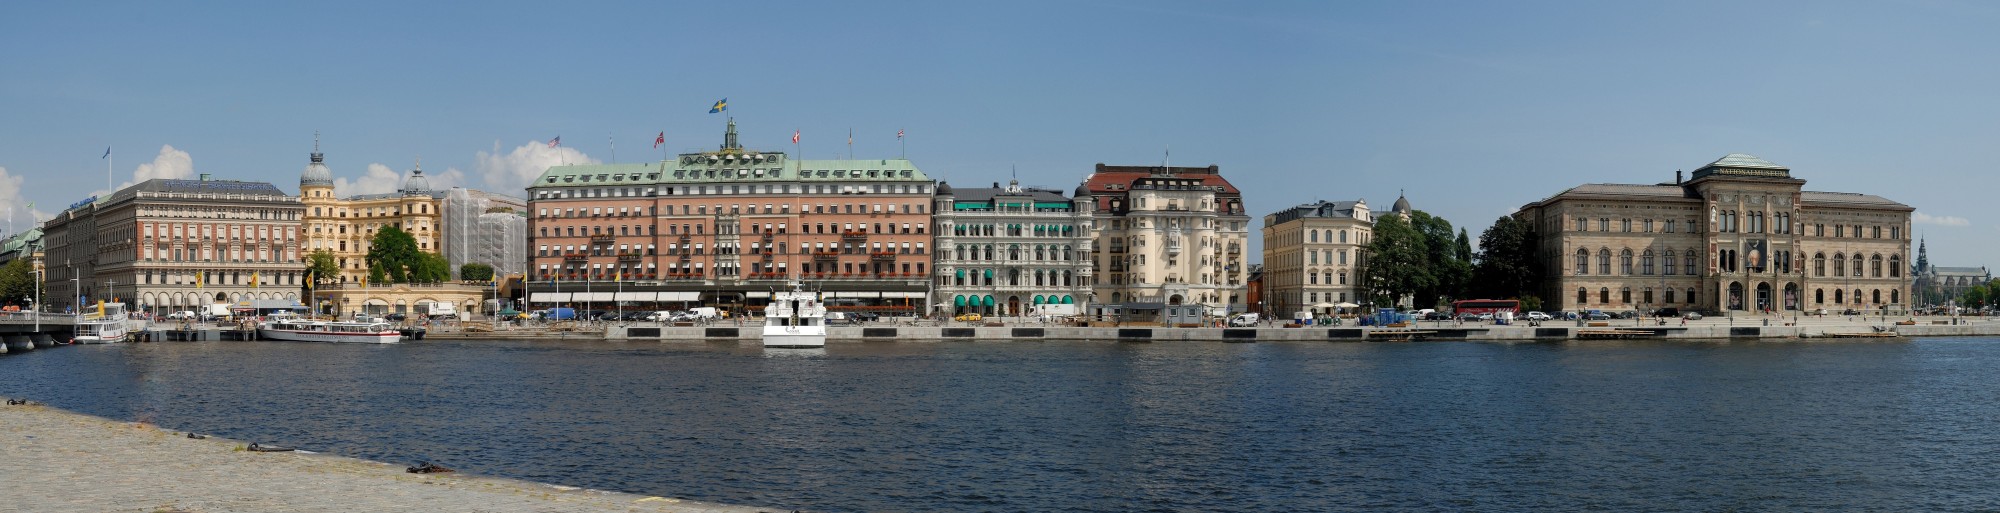 Pano Grand-Hotel Nationalmuseum Stockholm DSC 0003w